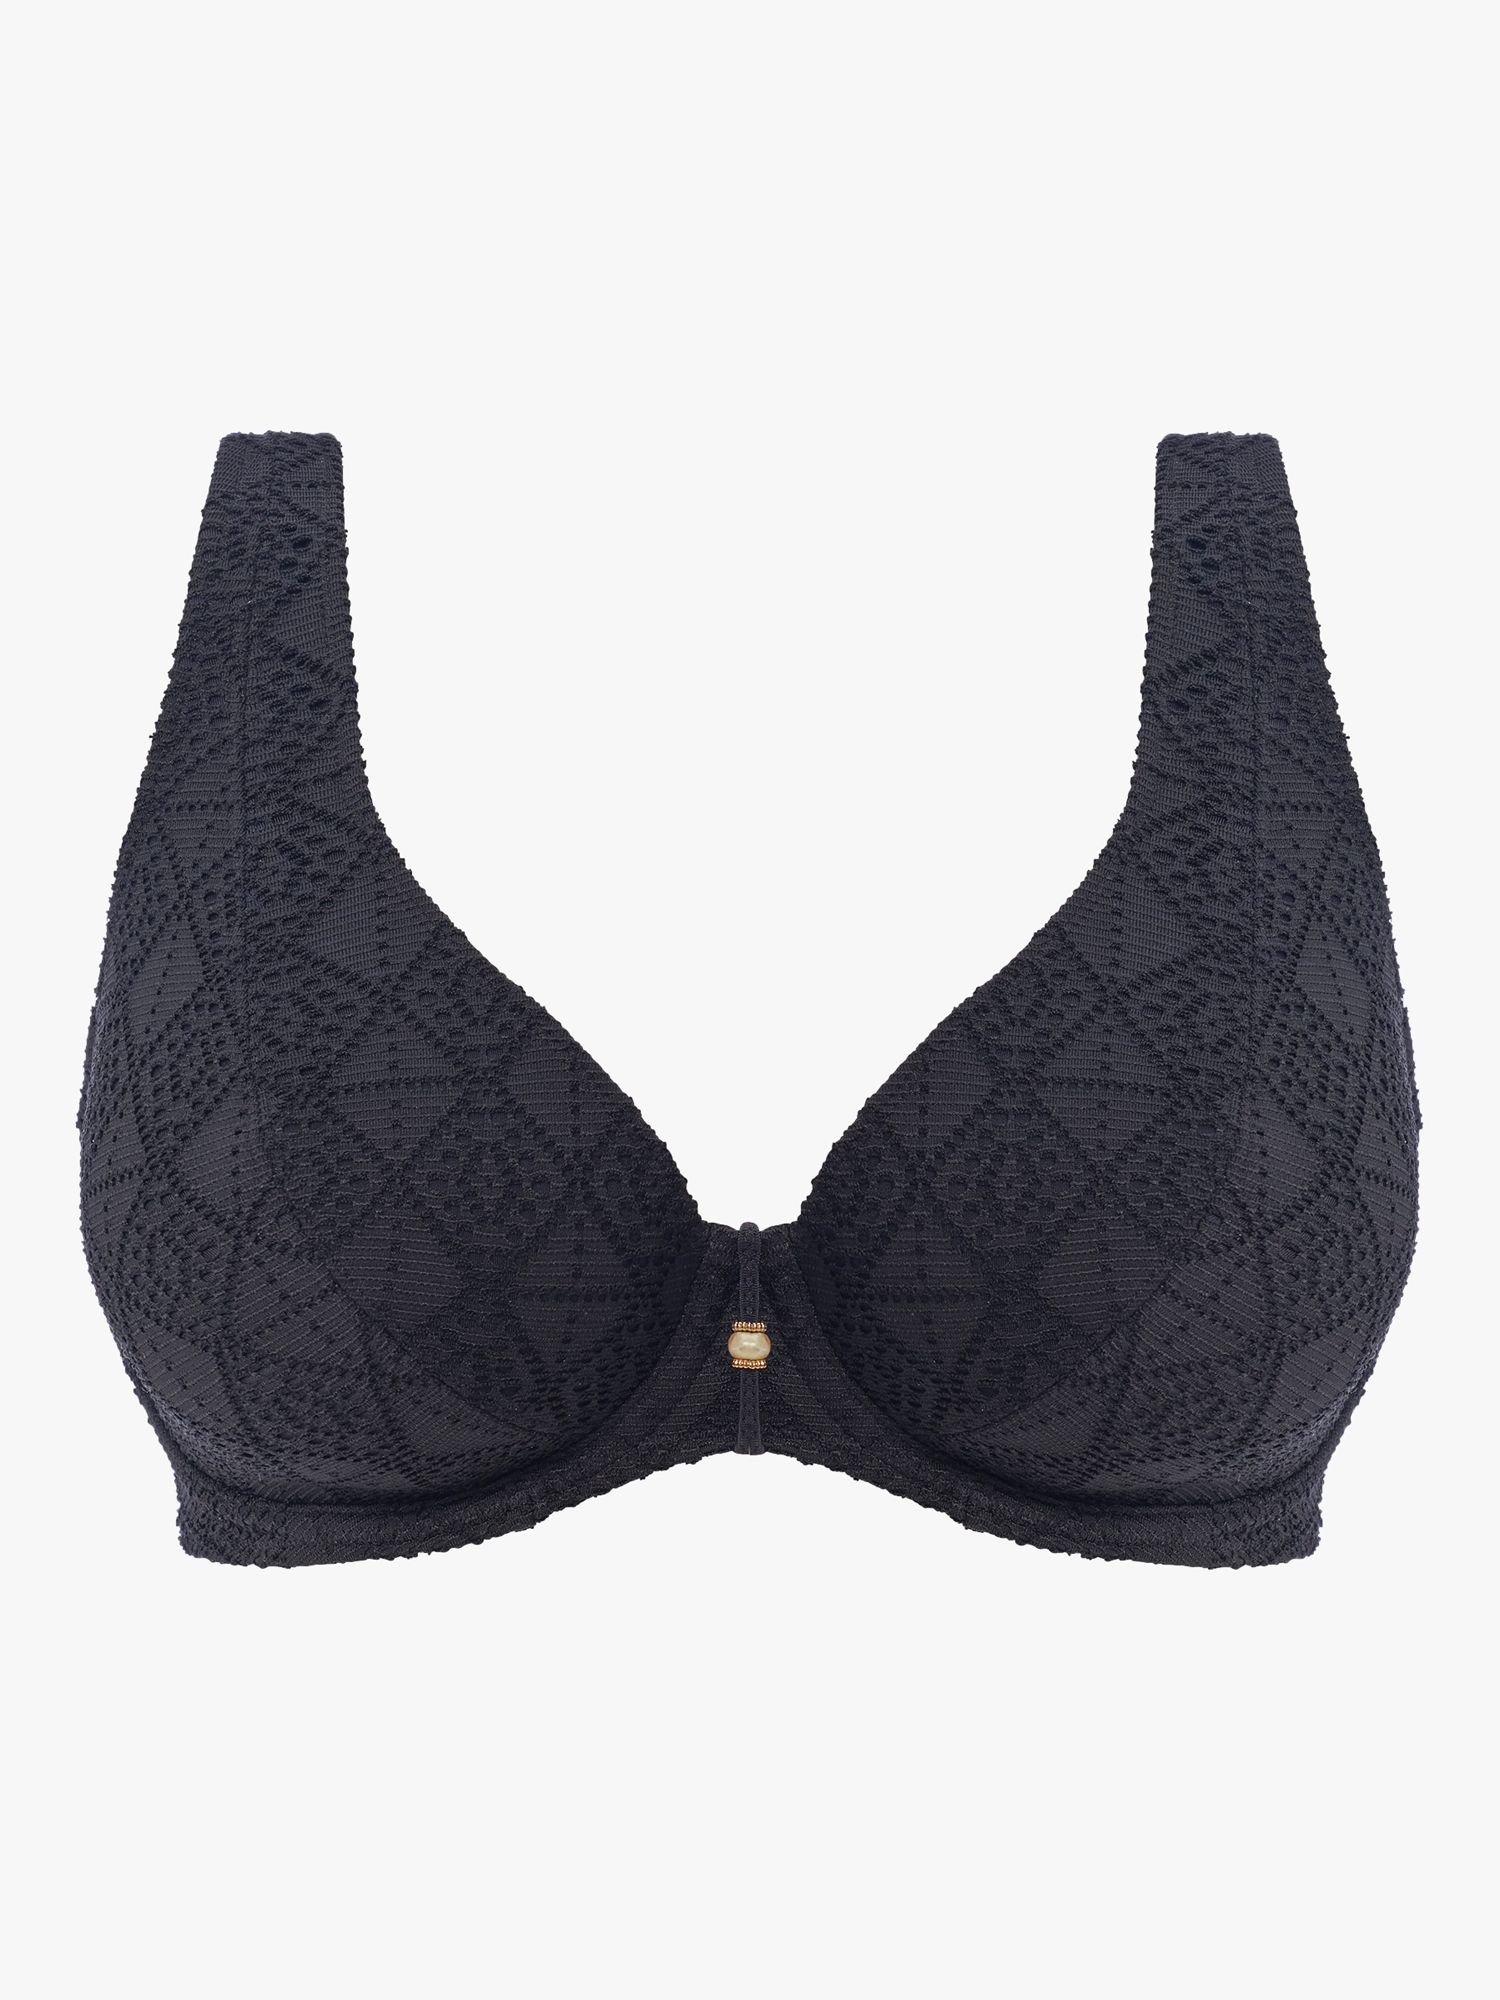 Freya Nomad Nights Crochet Underwired Bikini Top, Black, 34DD